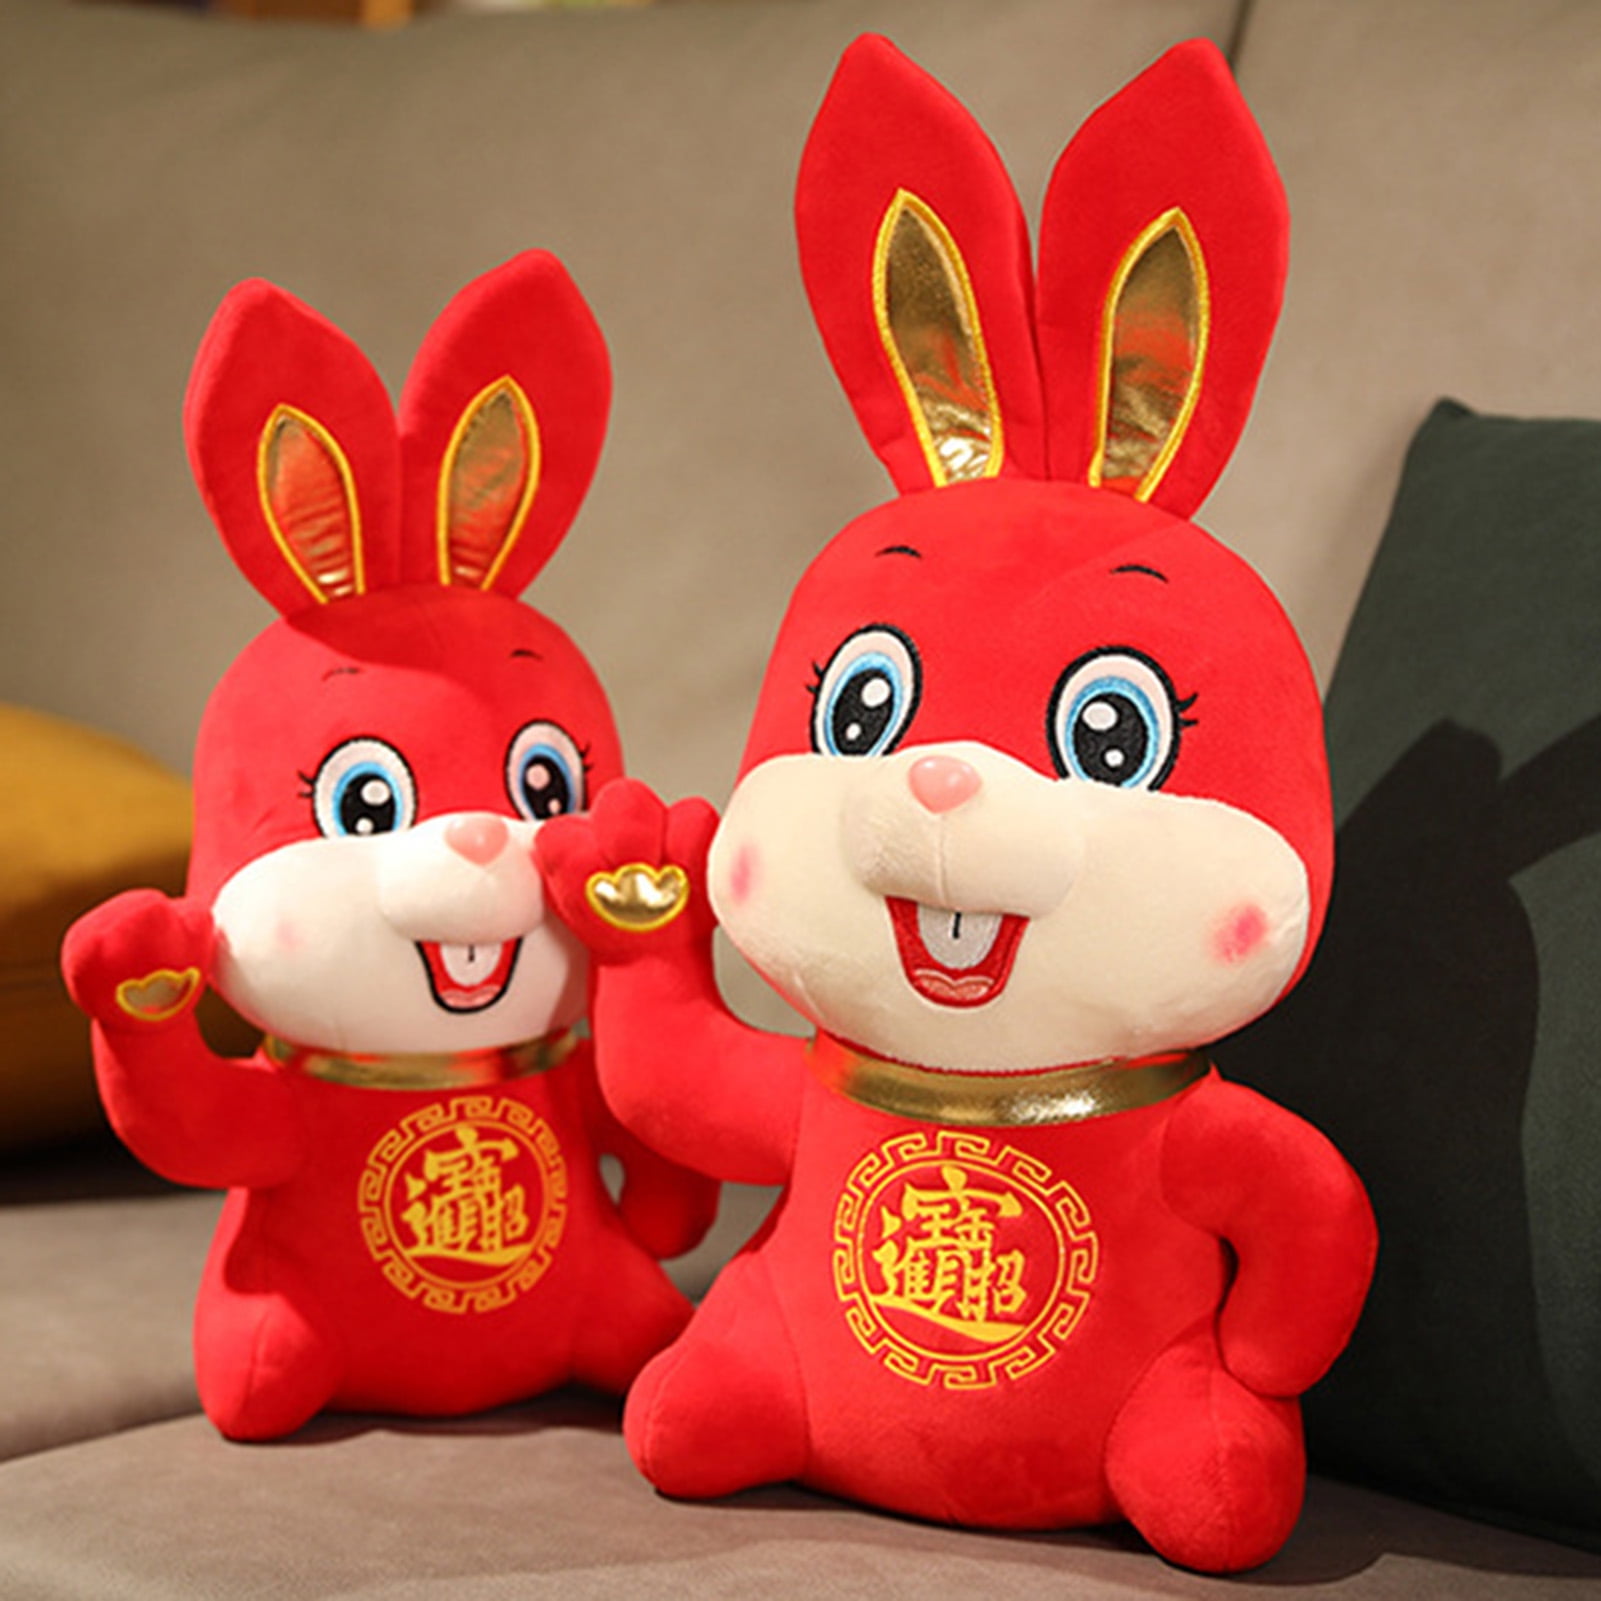 Red bunny toy, Creepy cute bjd art doll, Stuffed bunny by RatBerry